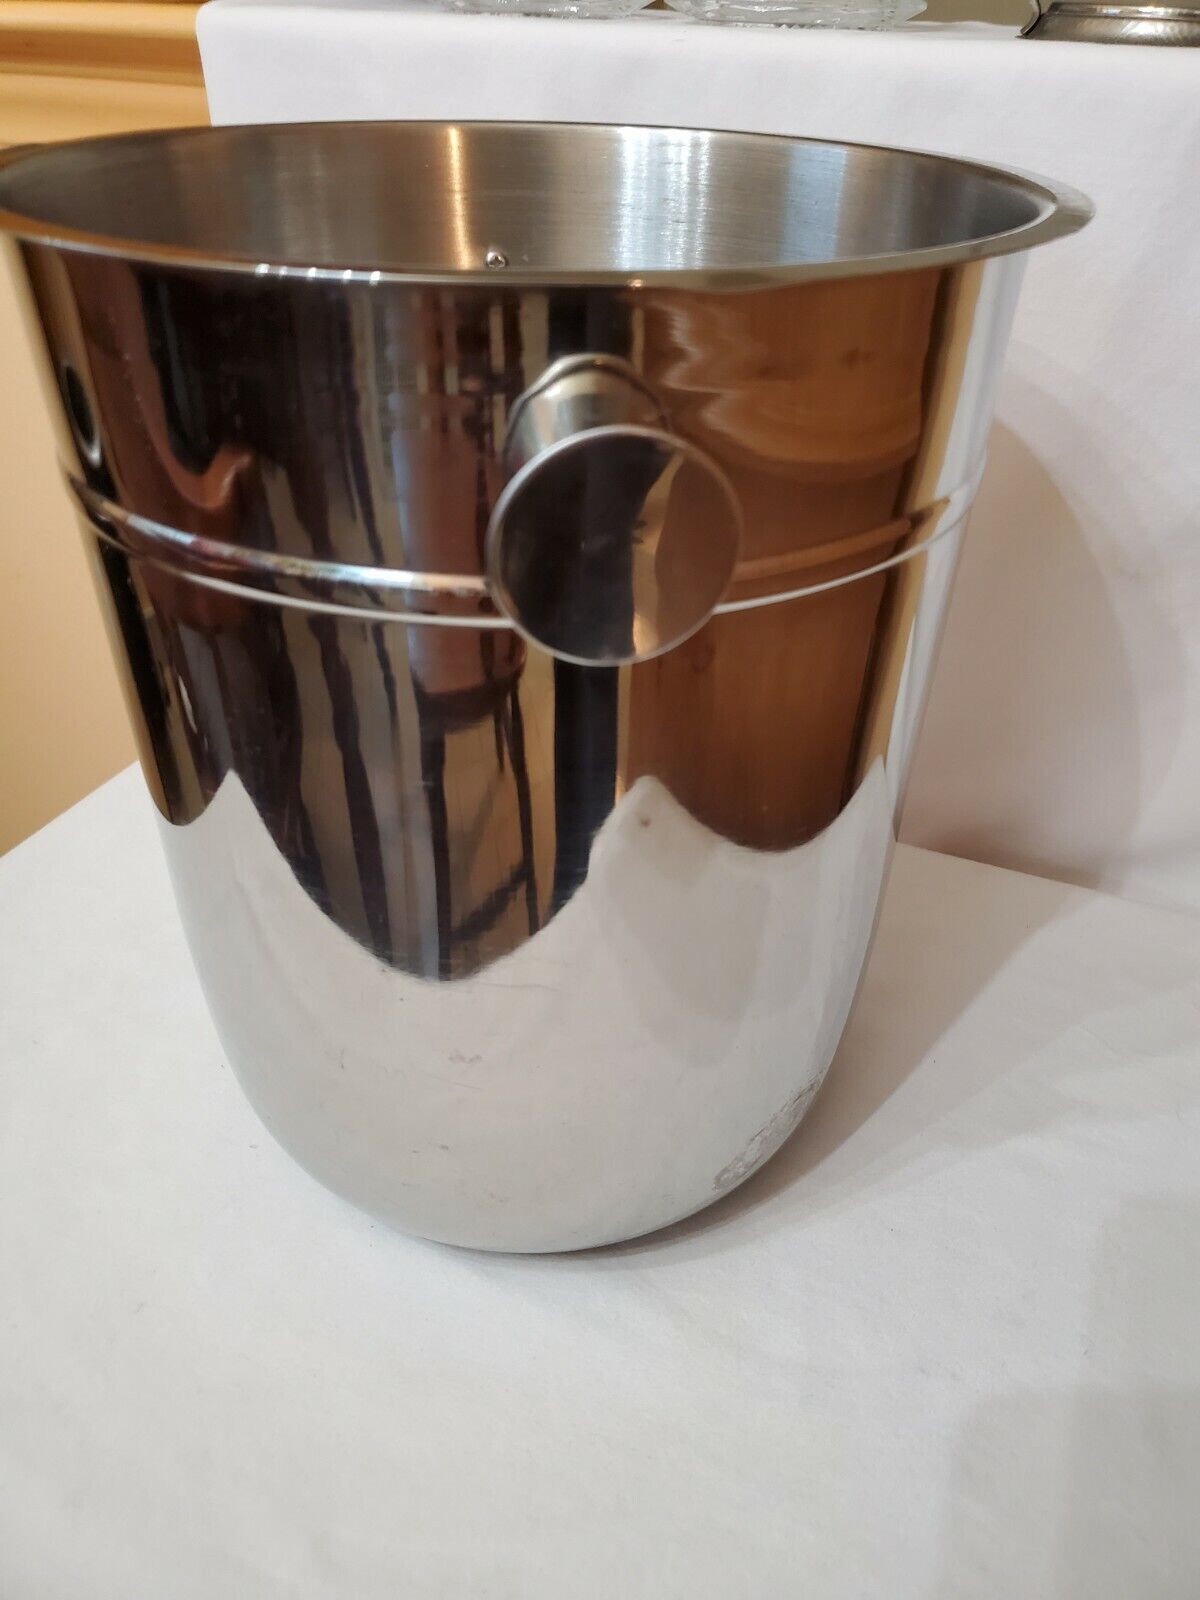 anheuser world select metal ice bucket beer bucket | eBay